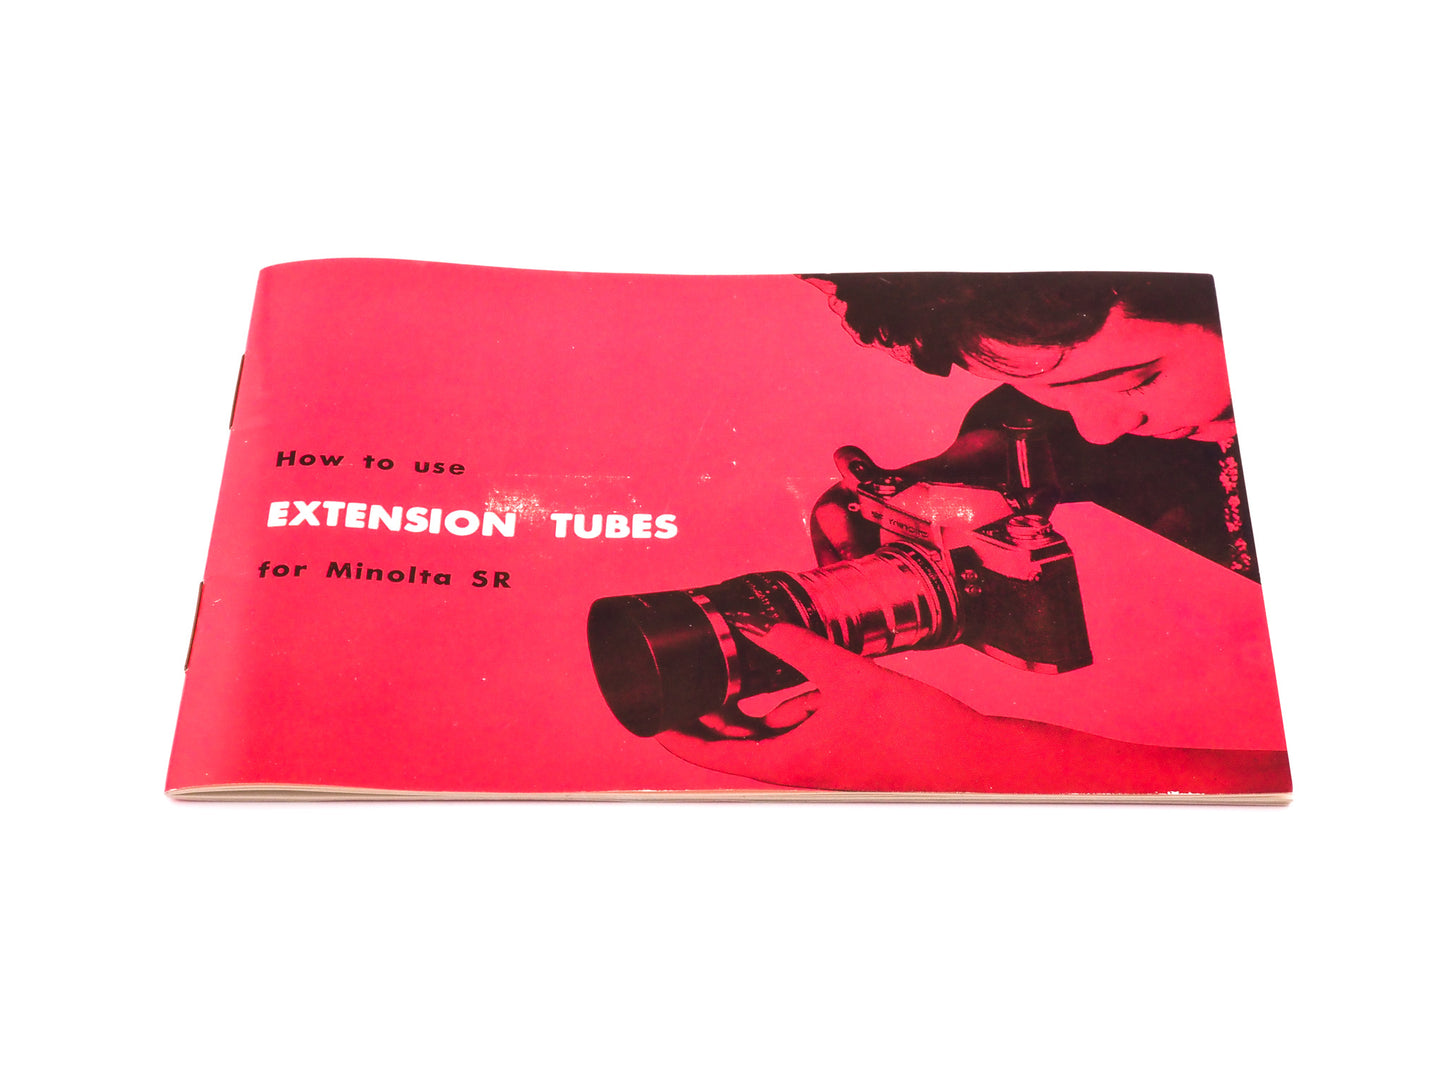 Minolta SR Extension Tubes Instructions